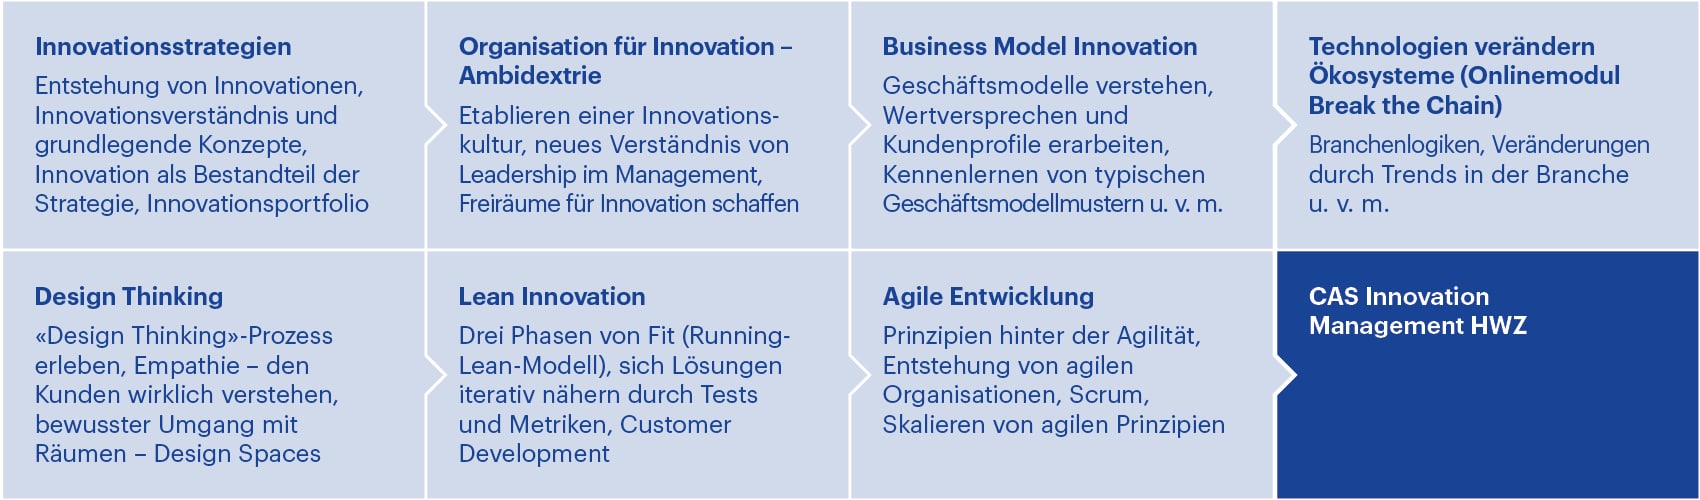 Grafik Business Model Innovation - CAS Innovation Management - HWZ